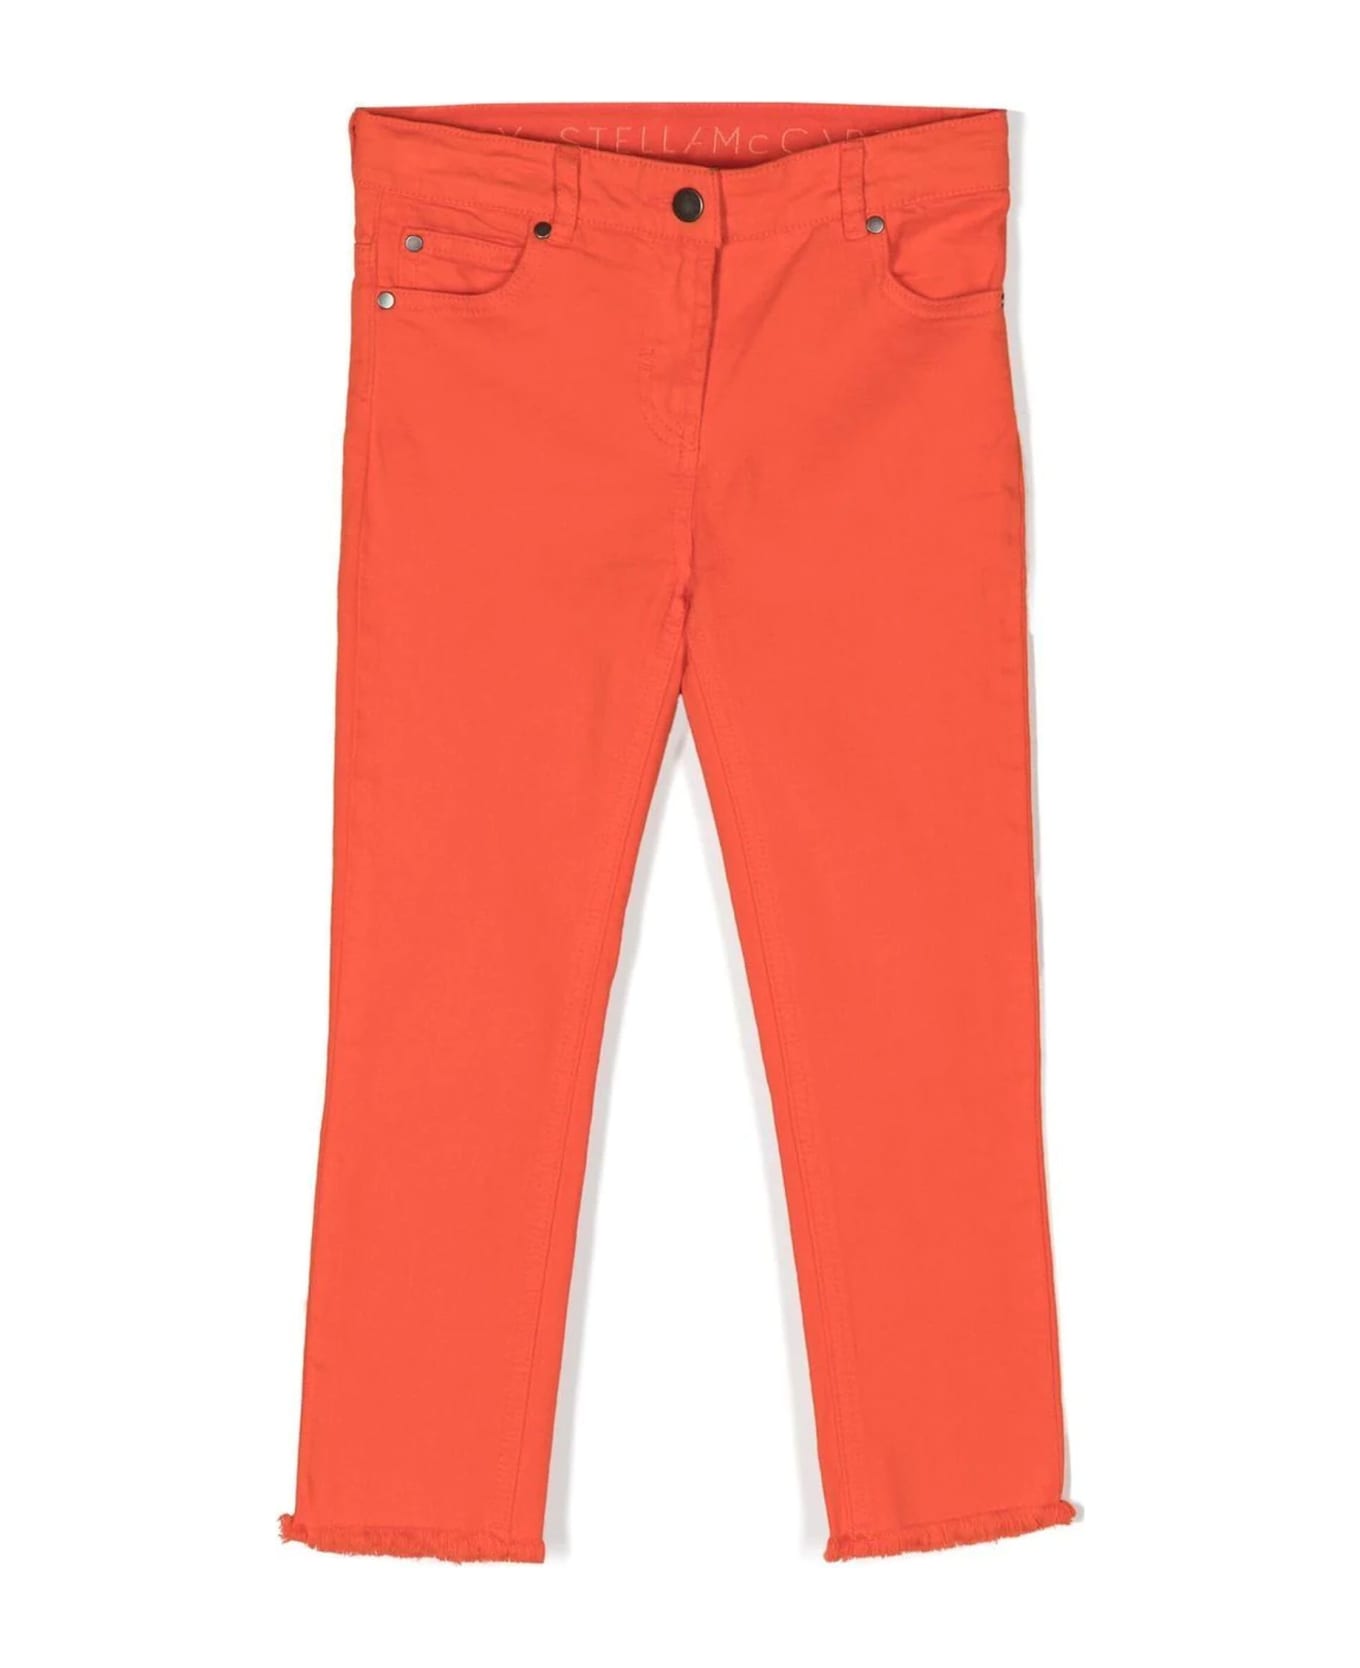 Stella McCartney Kids Trousers Orange - Orange